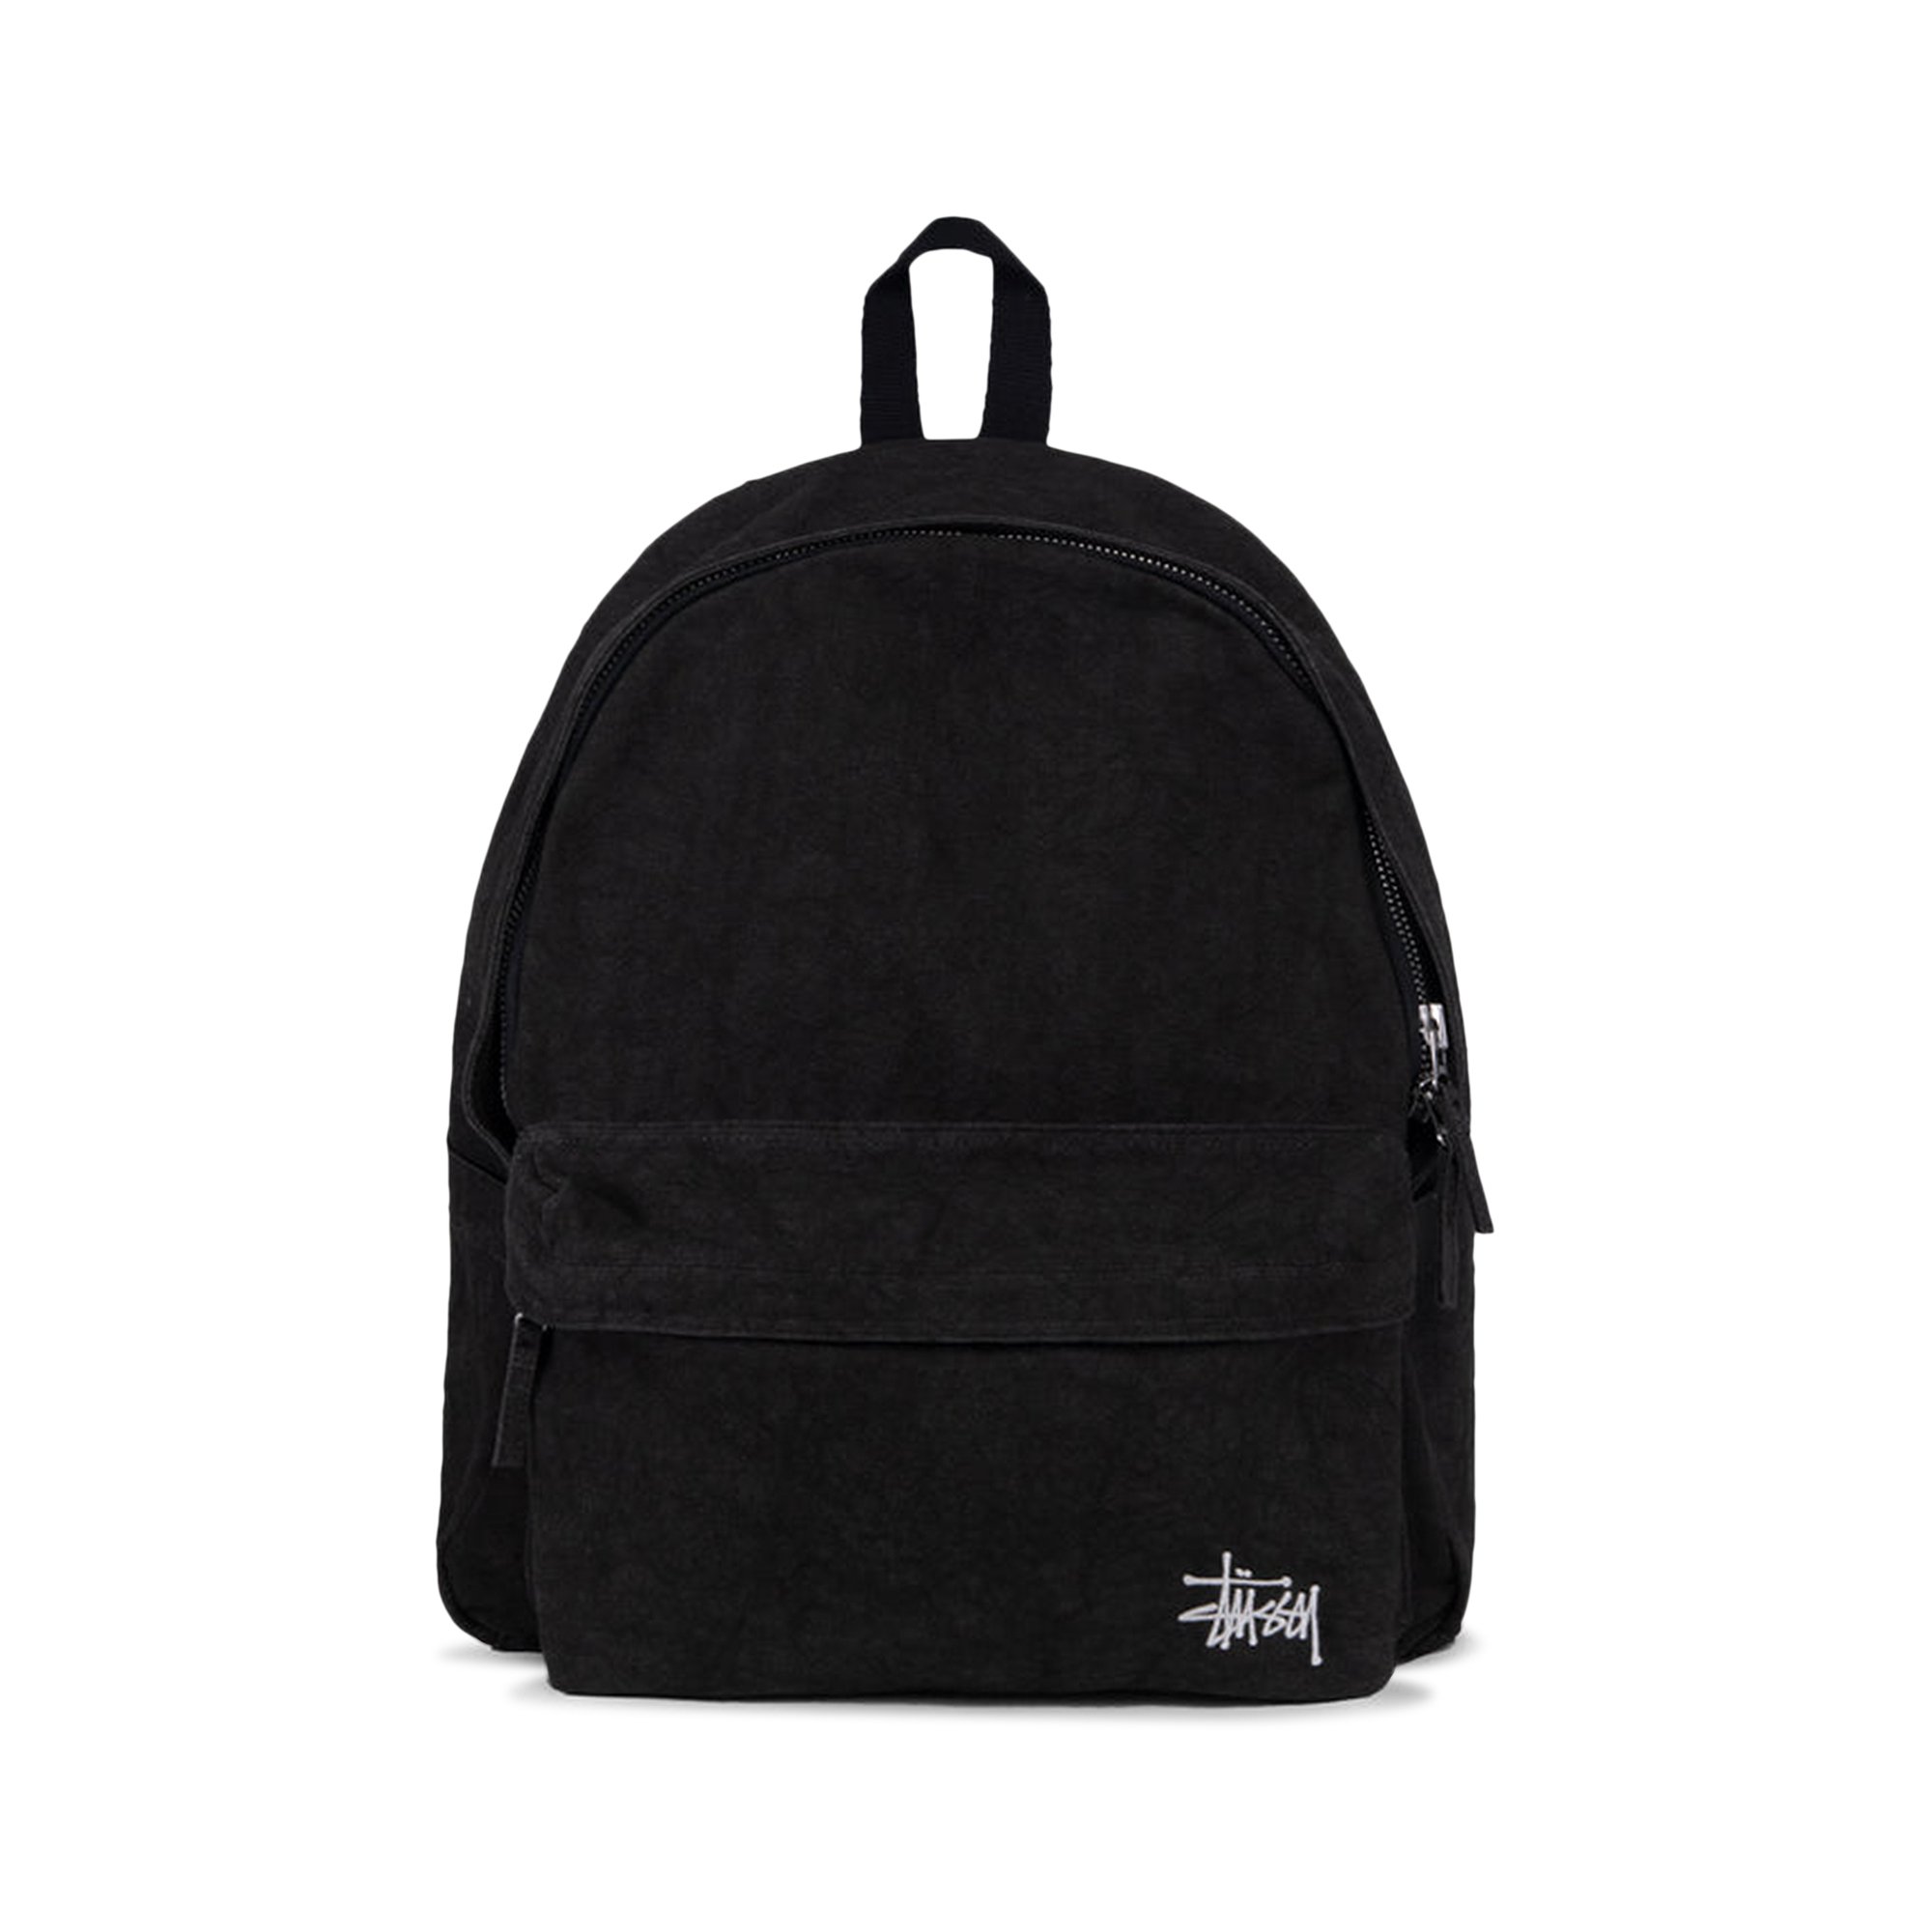 Buy Stussy Canvas Backpack 'Washed Black' - 134252 WASH | GOAT